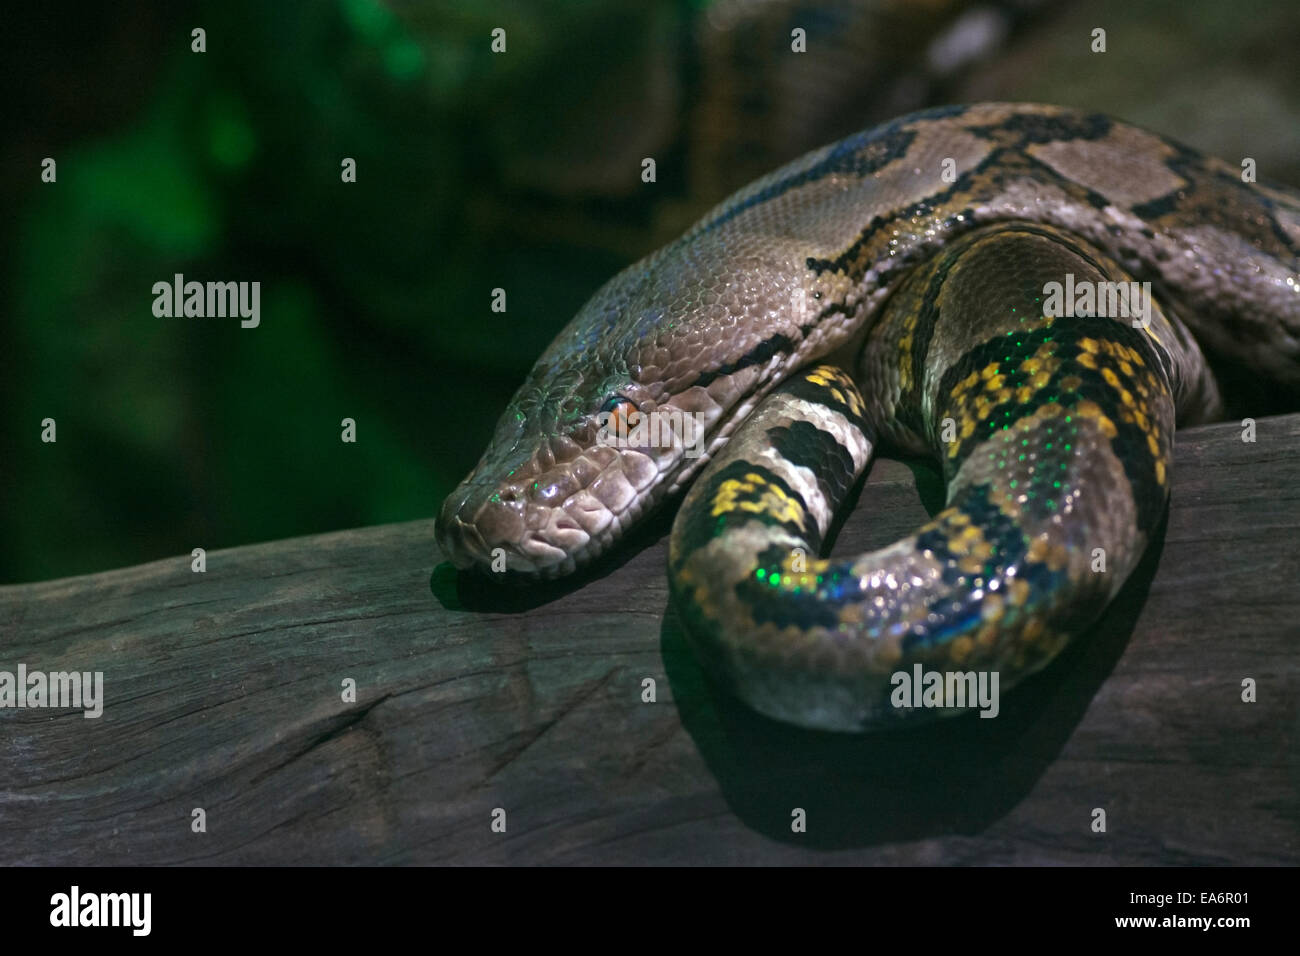 Royal Python Snake. Stock Photo